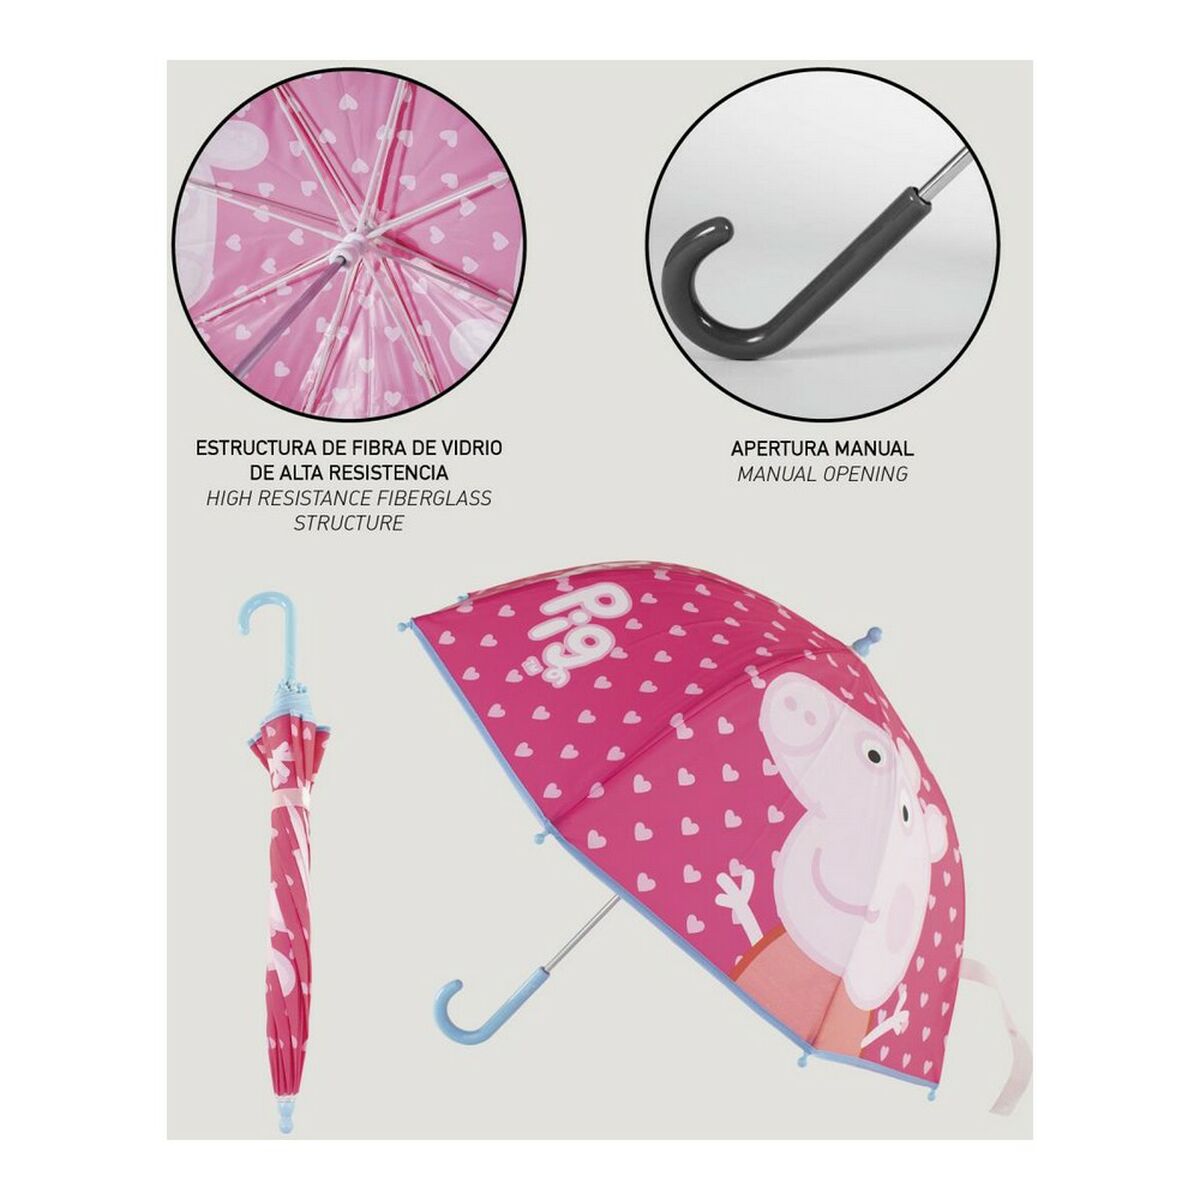 Umbrella Peppa Pig Pink